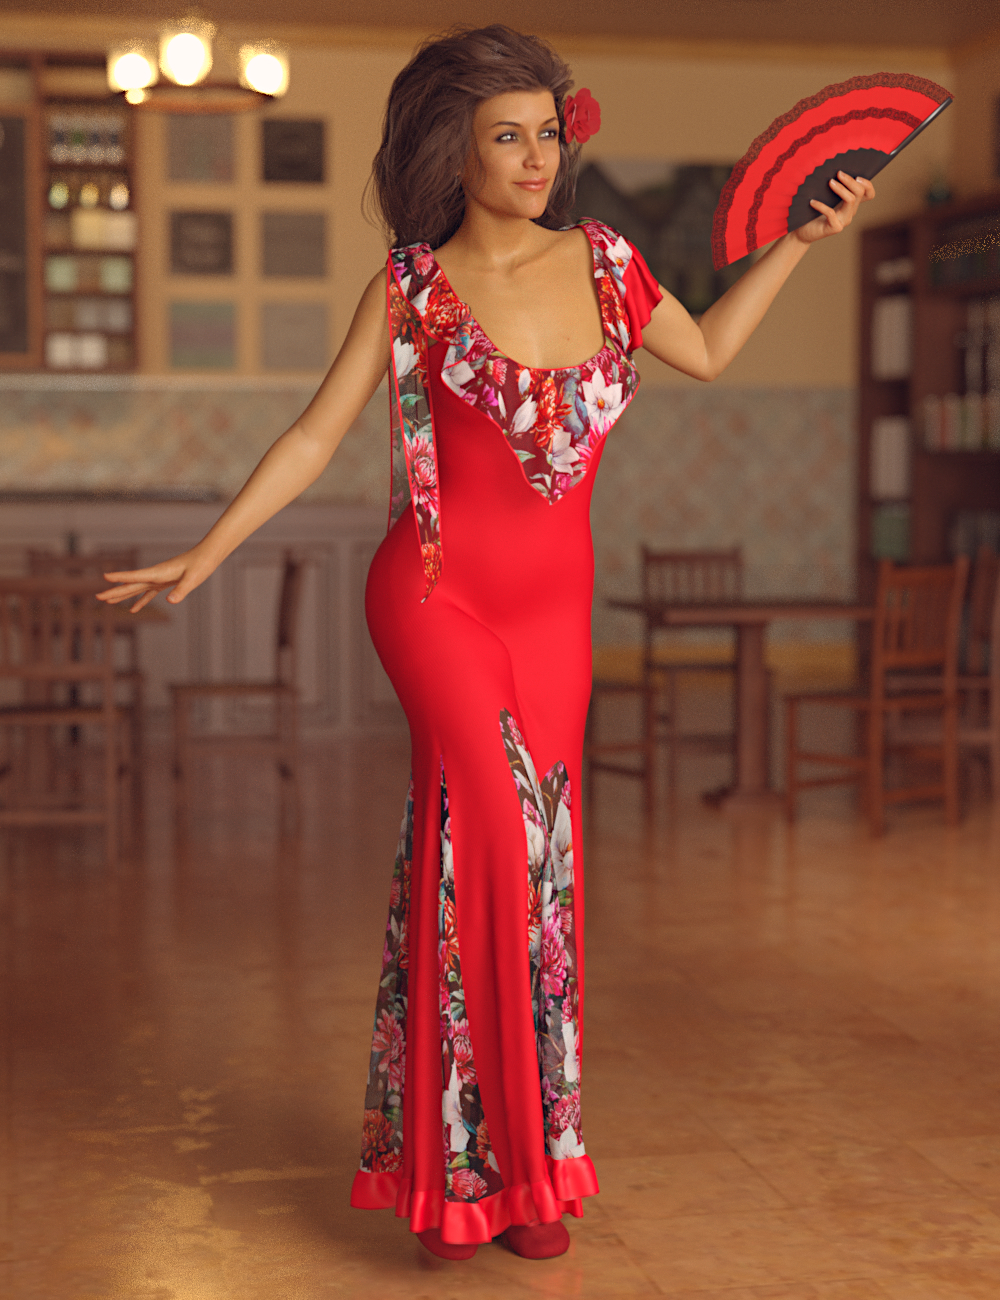 dforce flamenco outfit for genesis 8 females 00 main daz3d FXSpihVM